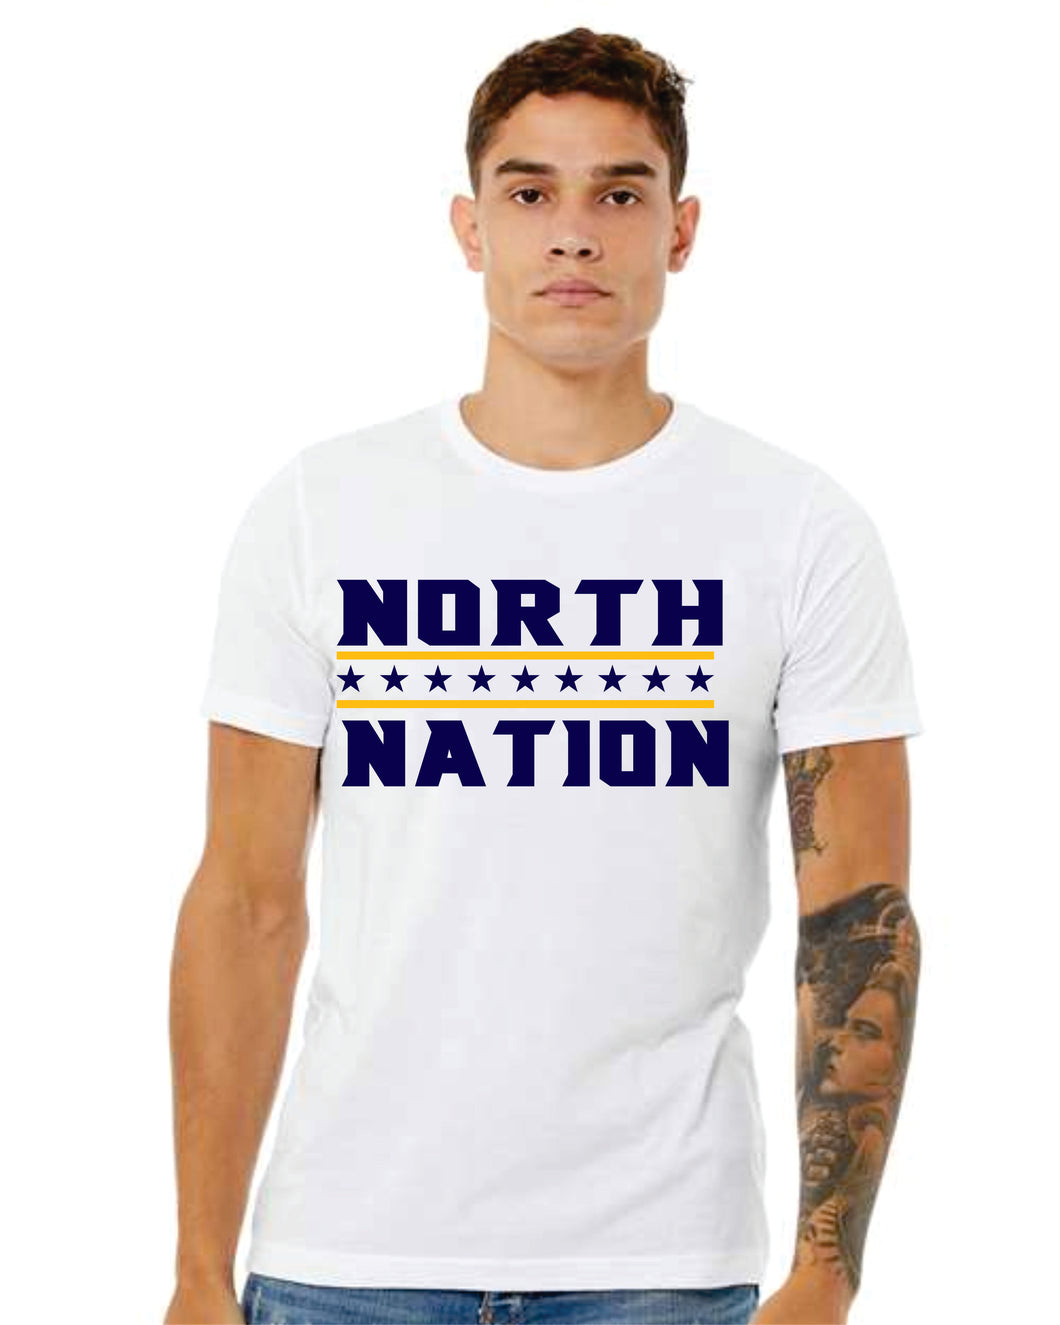 NORTH NATION bella canvas t-shirt